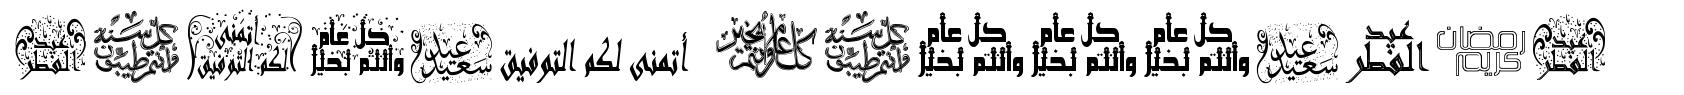 Arabic Greetings fuente